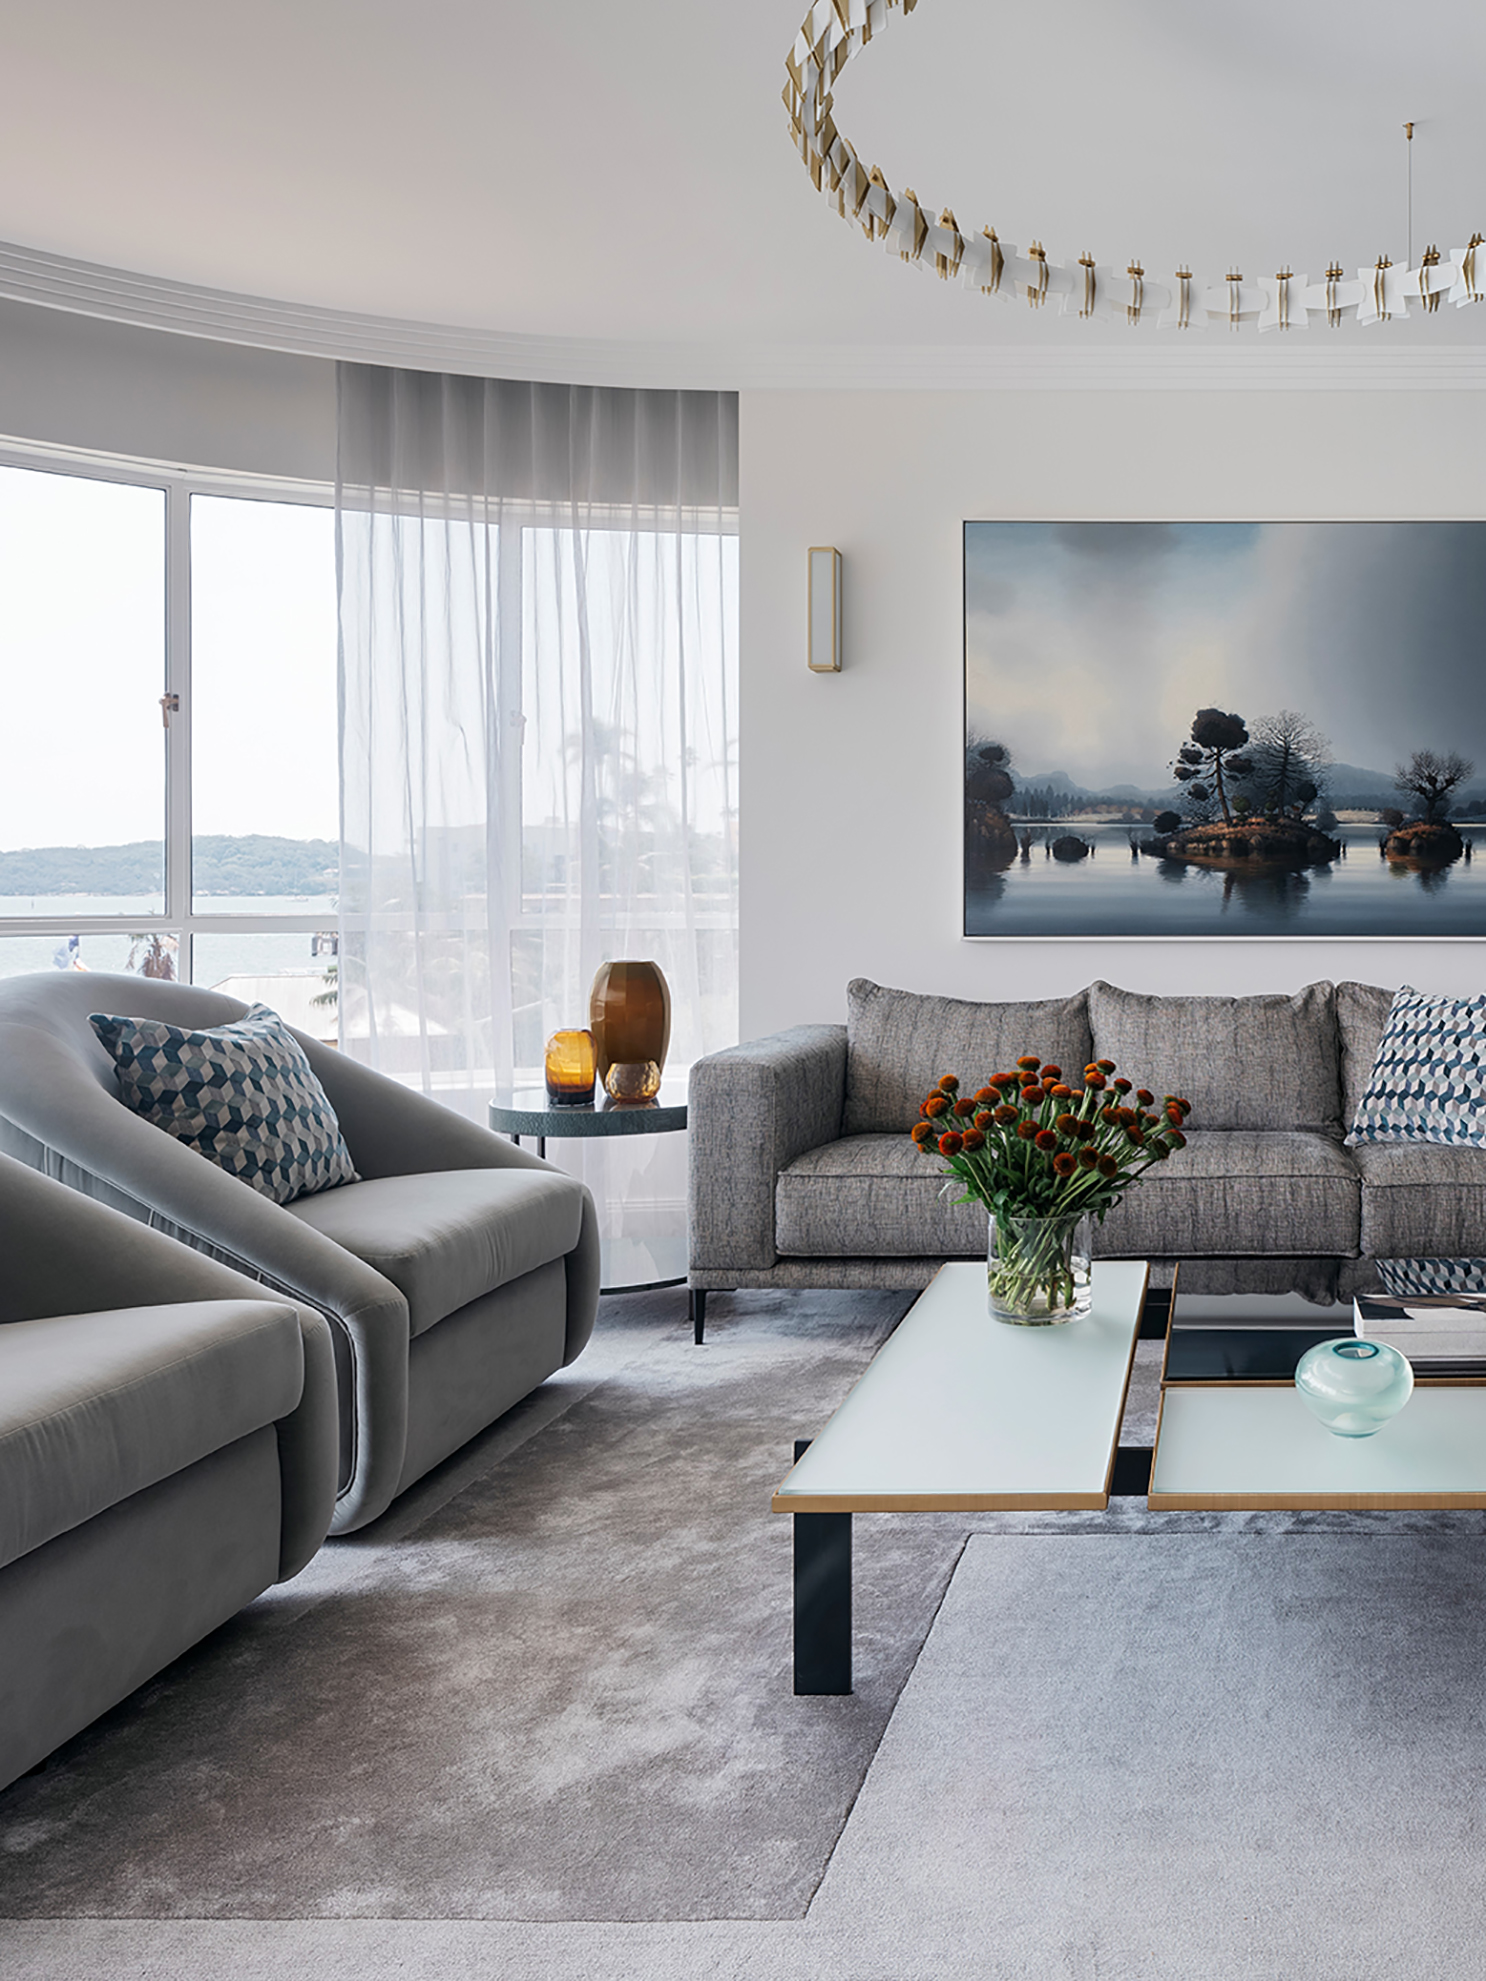 Luxury living room from Sydney Interior designers, Brendan Wong Design, with artwork by artists Alexander McKenzie